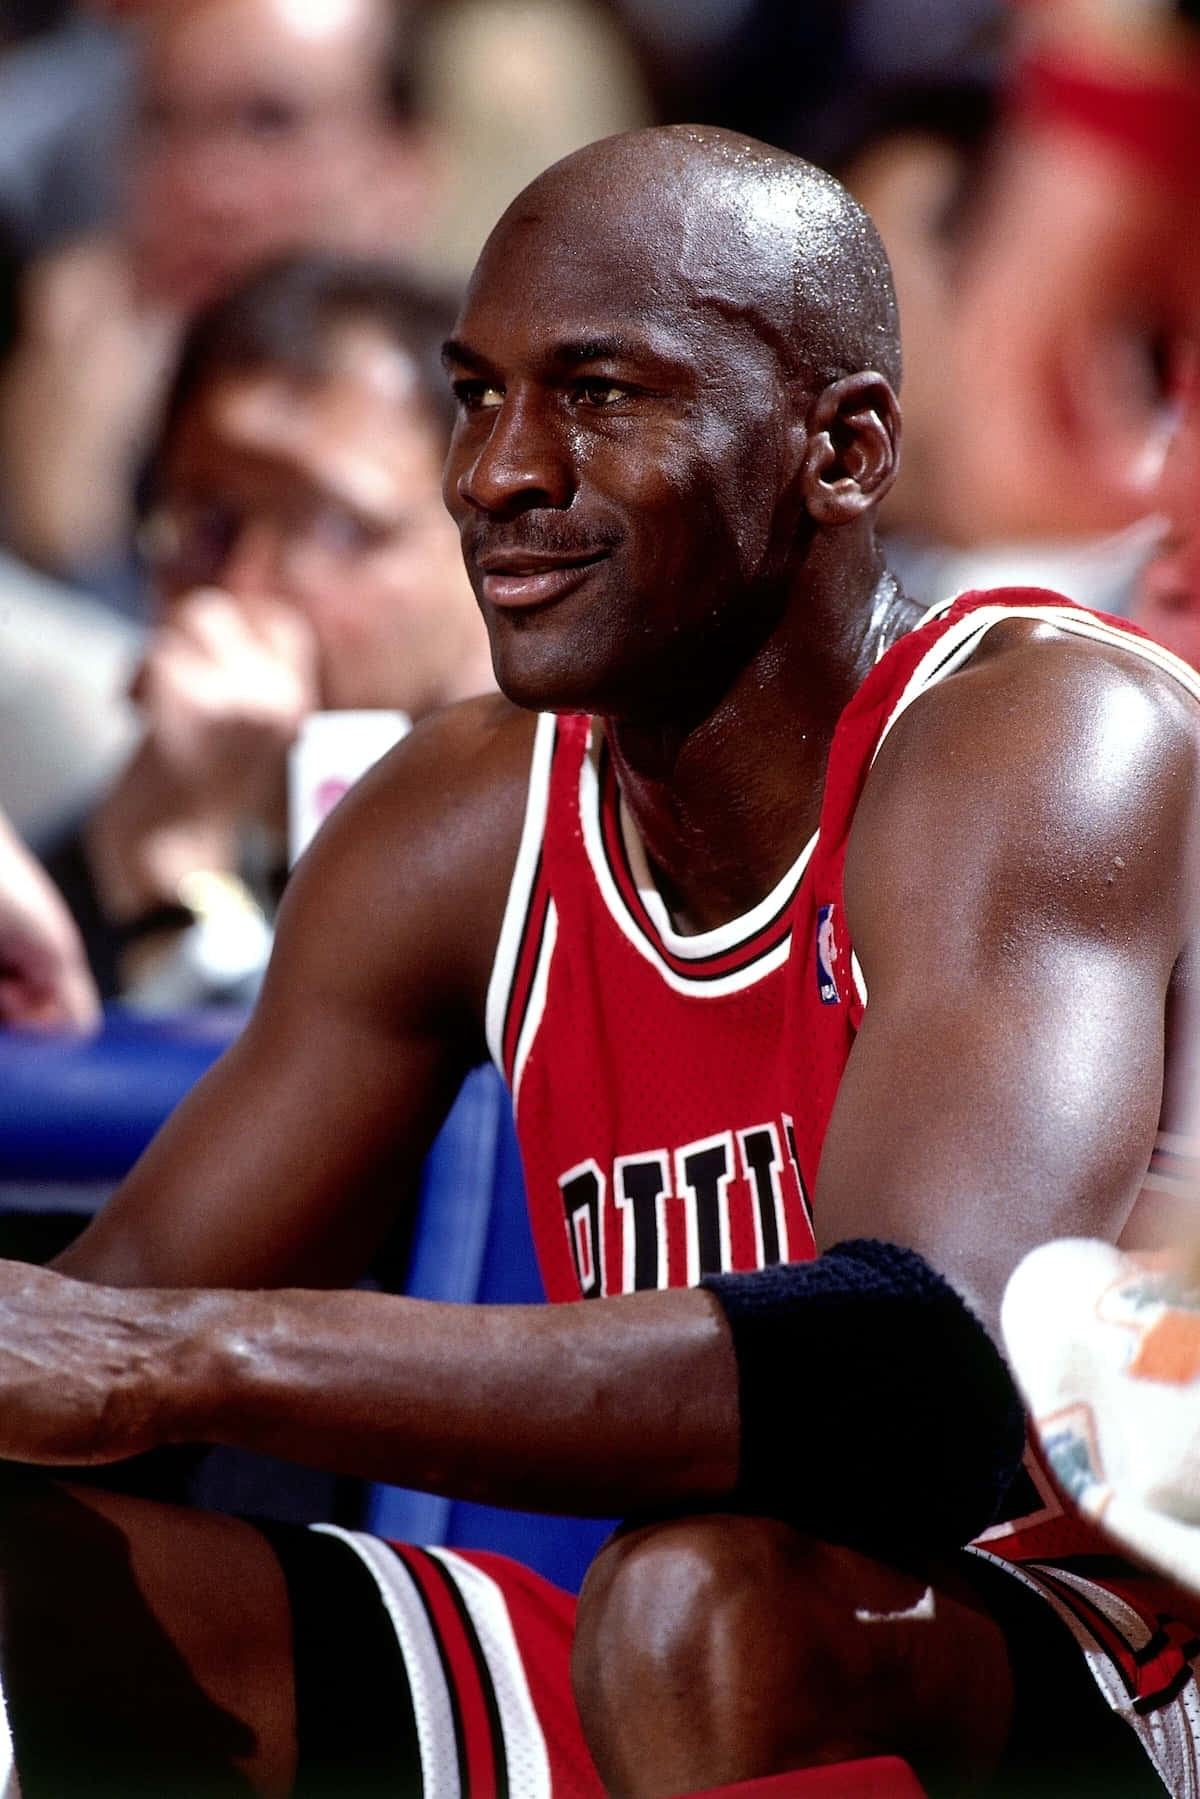 Iconic Basketball Star Michael Jordan